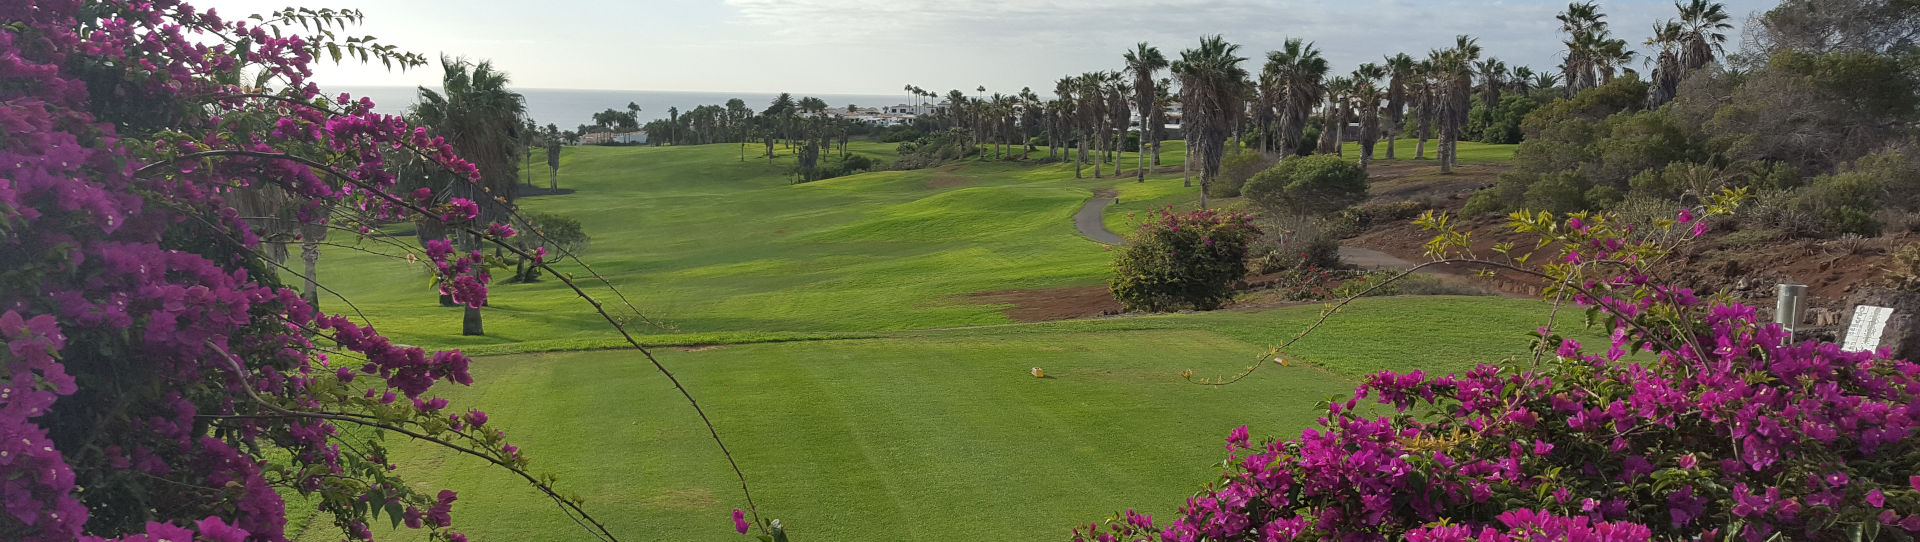 Spain golf holidays - Golf del Sur Trio Experience - Photo 3